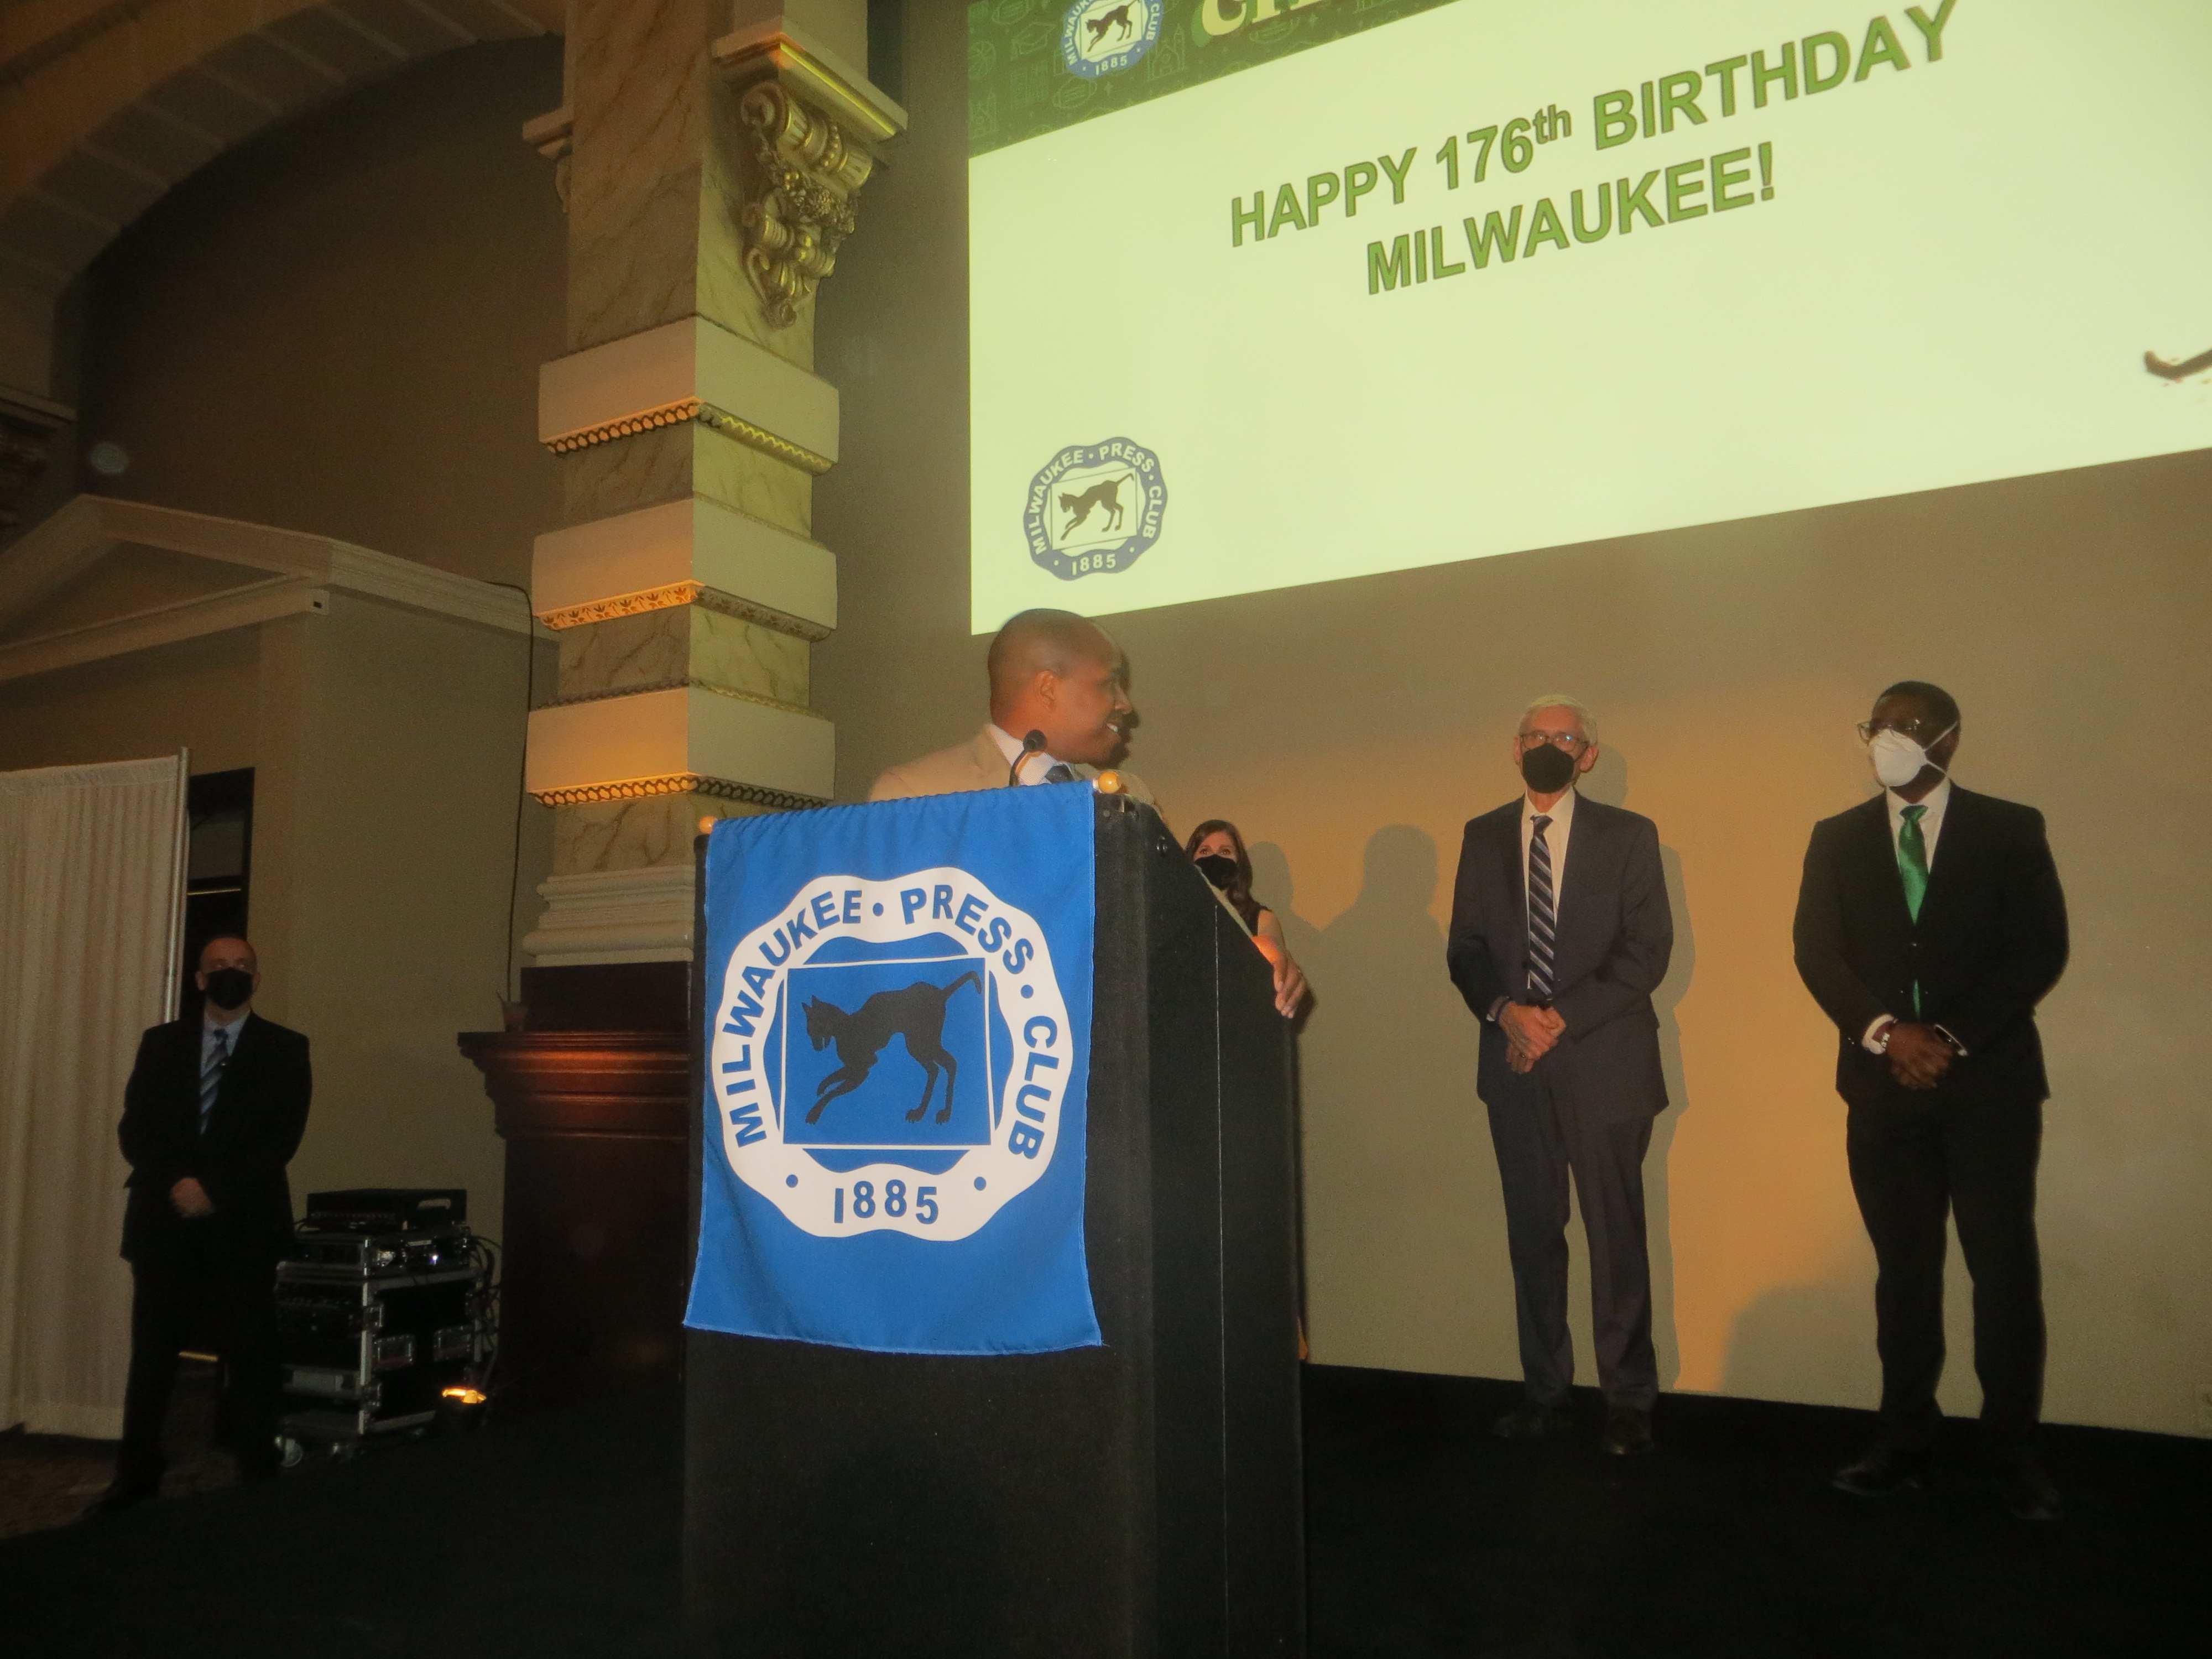 Happy 176th Birthday Milwaukee! Photo by Michael Horne.